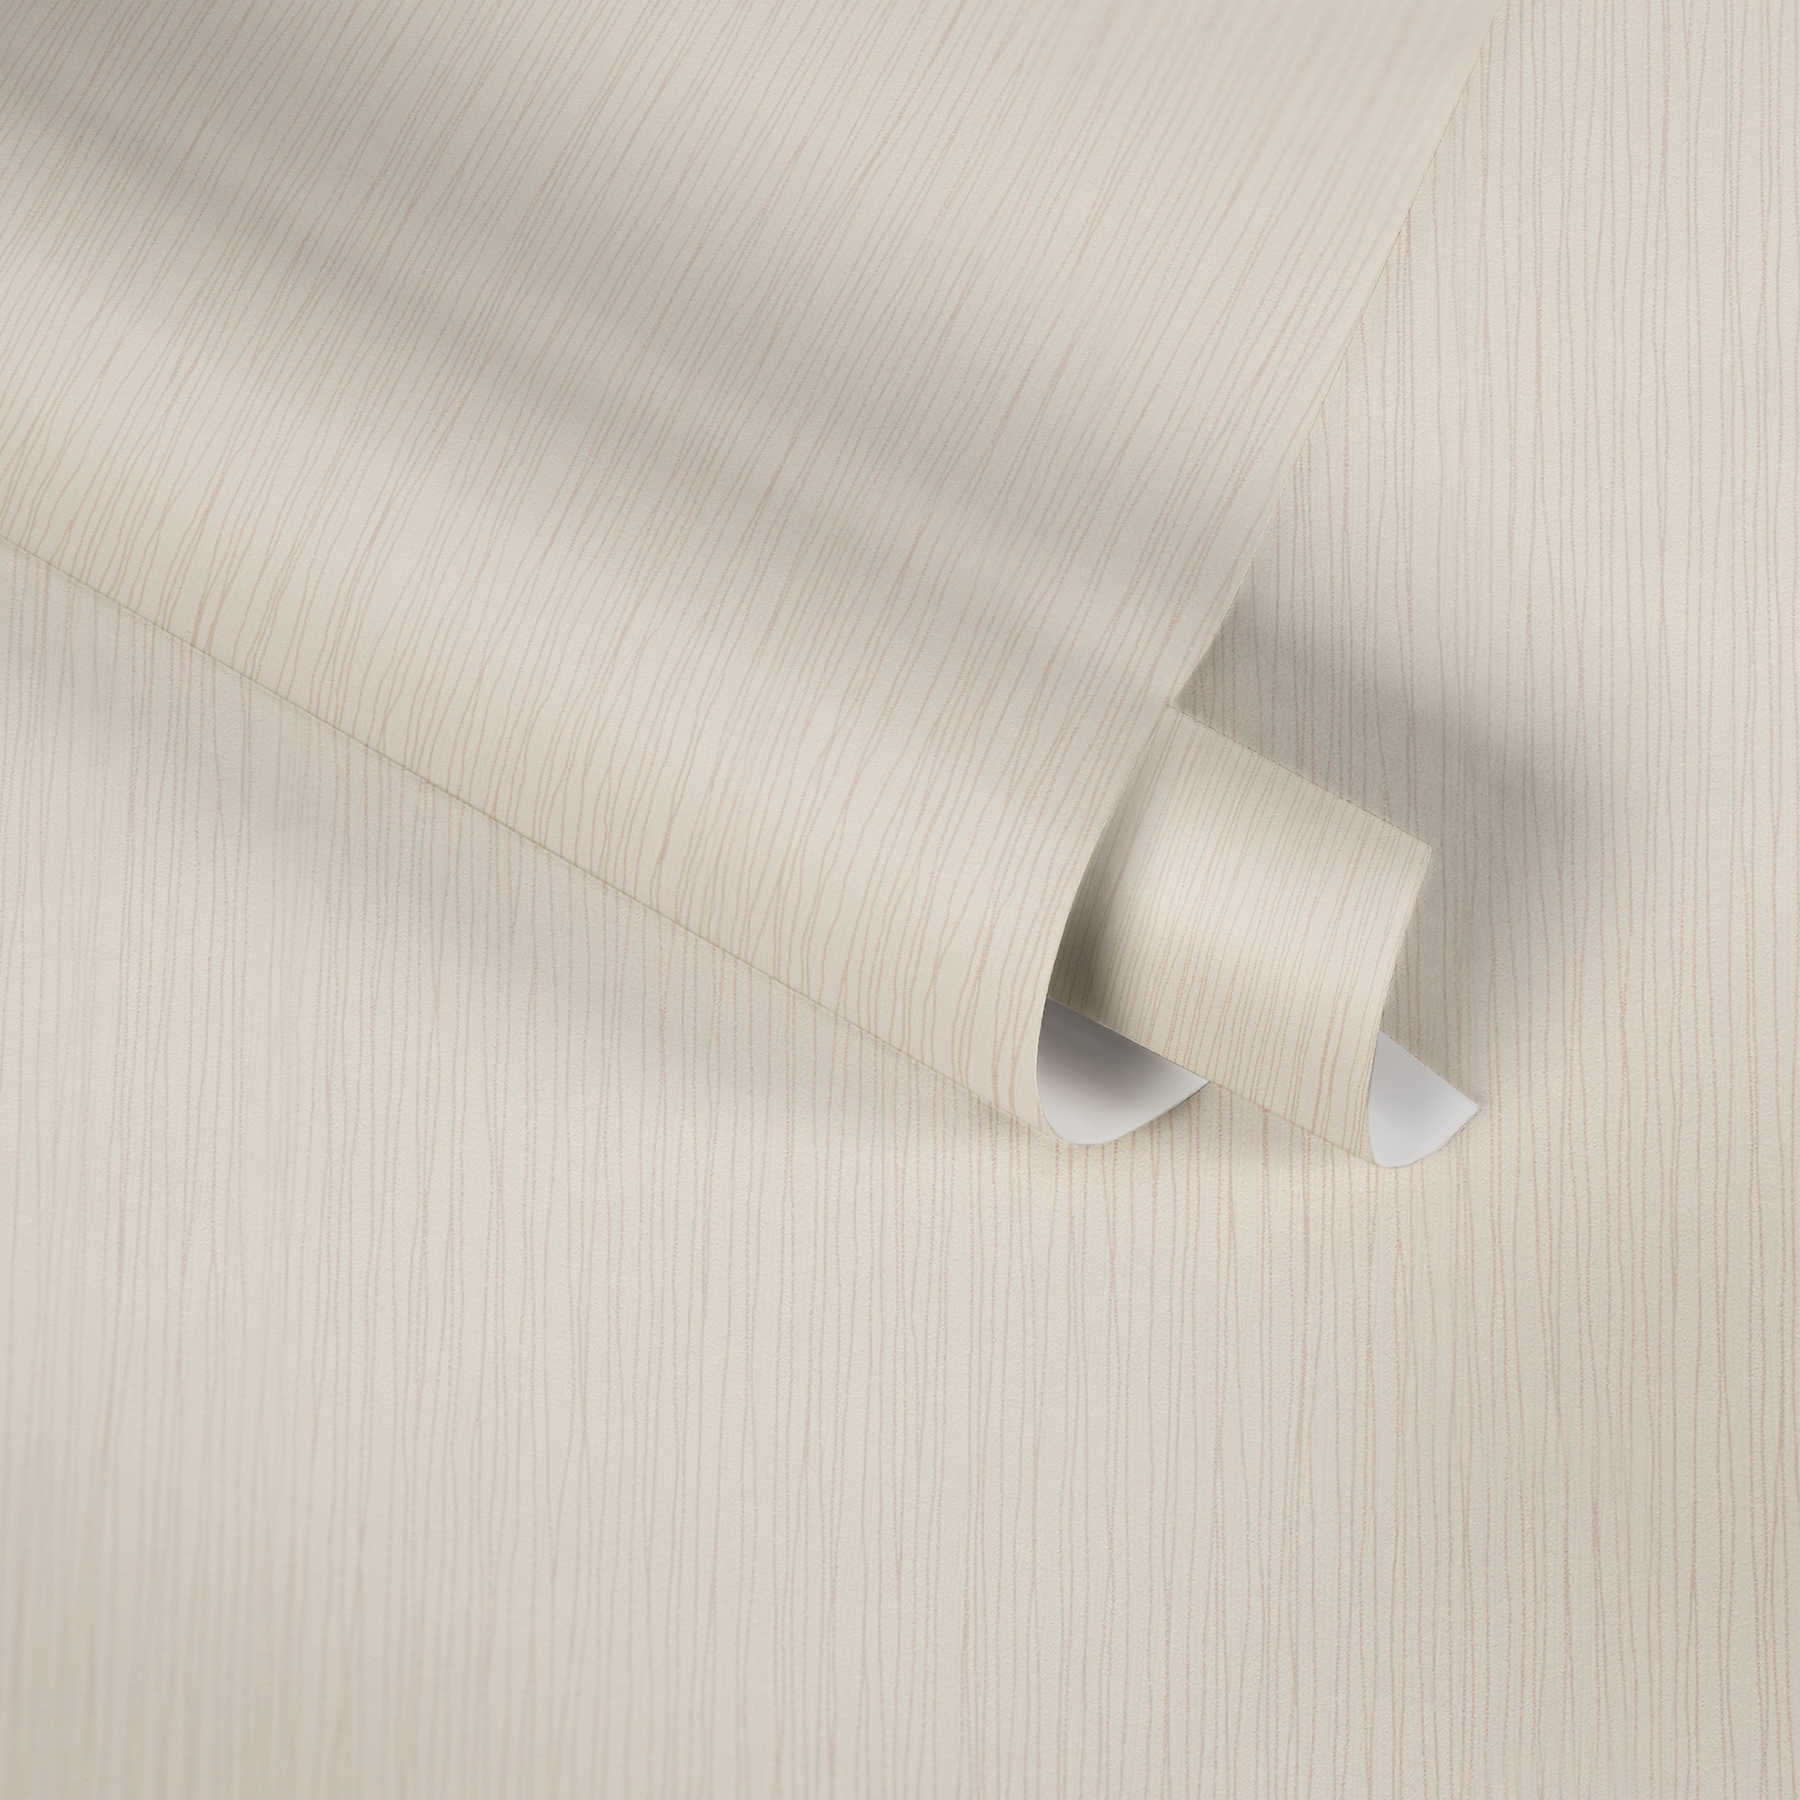             Bright non-woven wallpaper beige line design & embossed texture
        